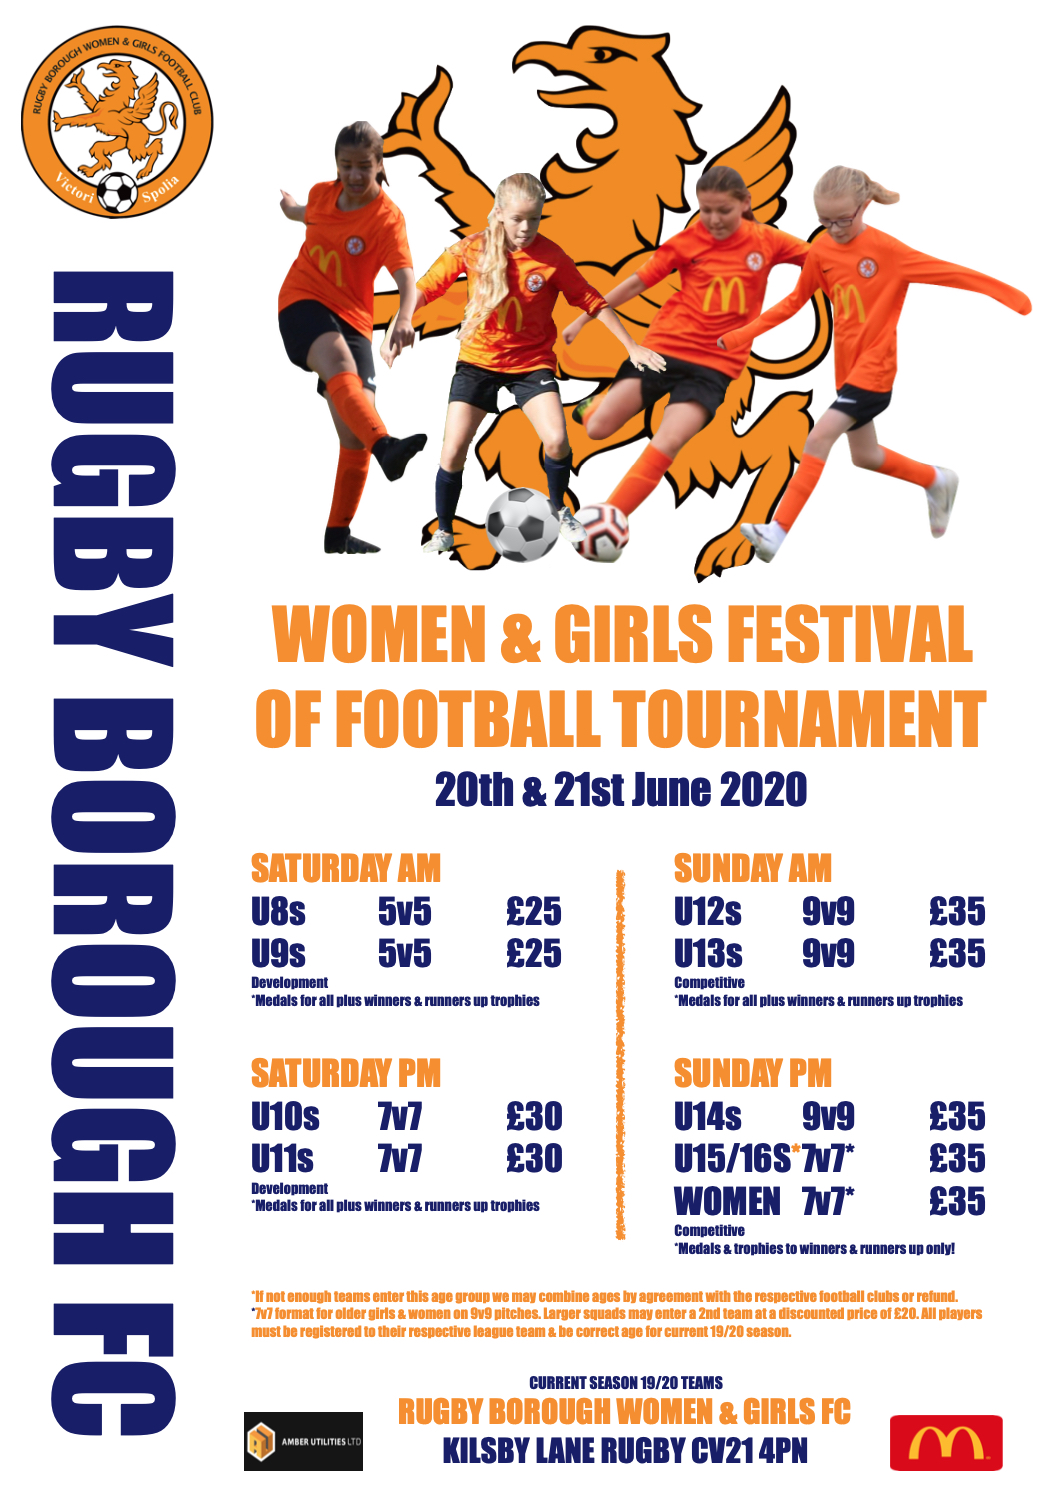 Rugby Borough Women & Girls - Festival of football promo